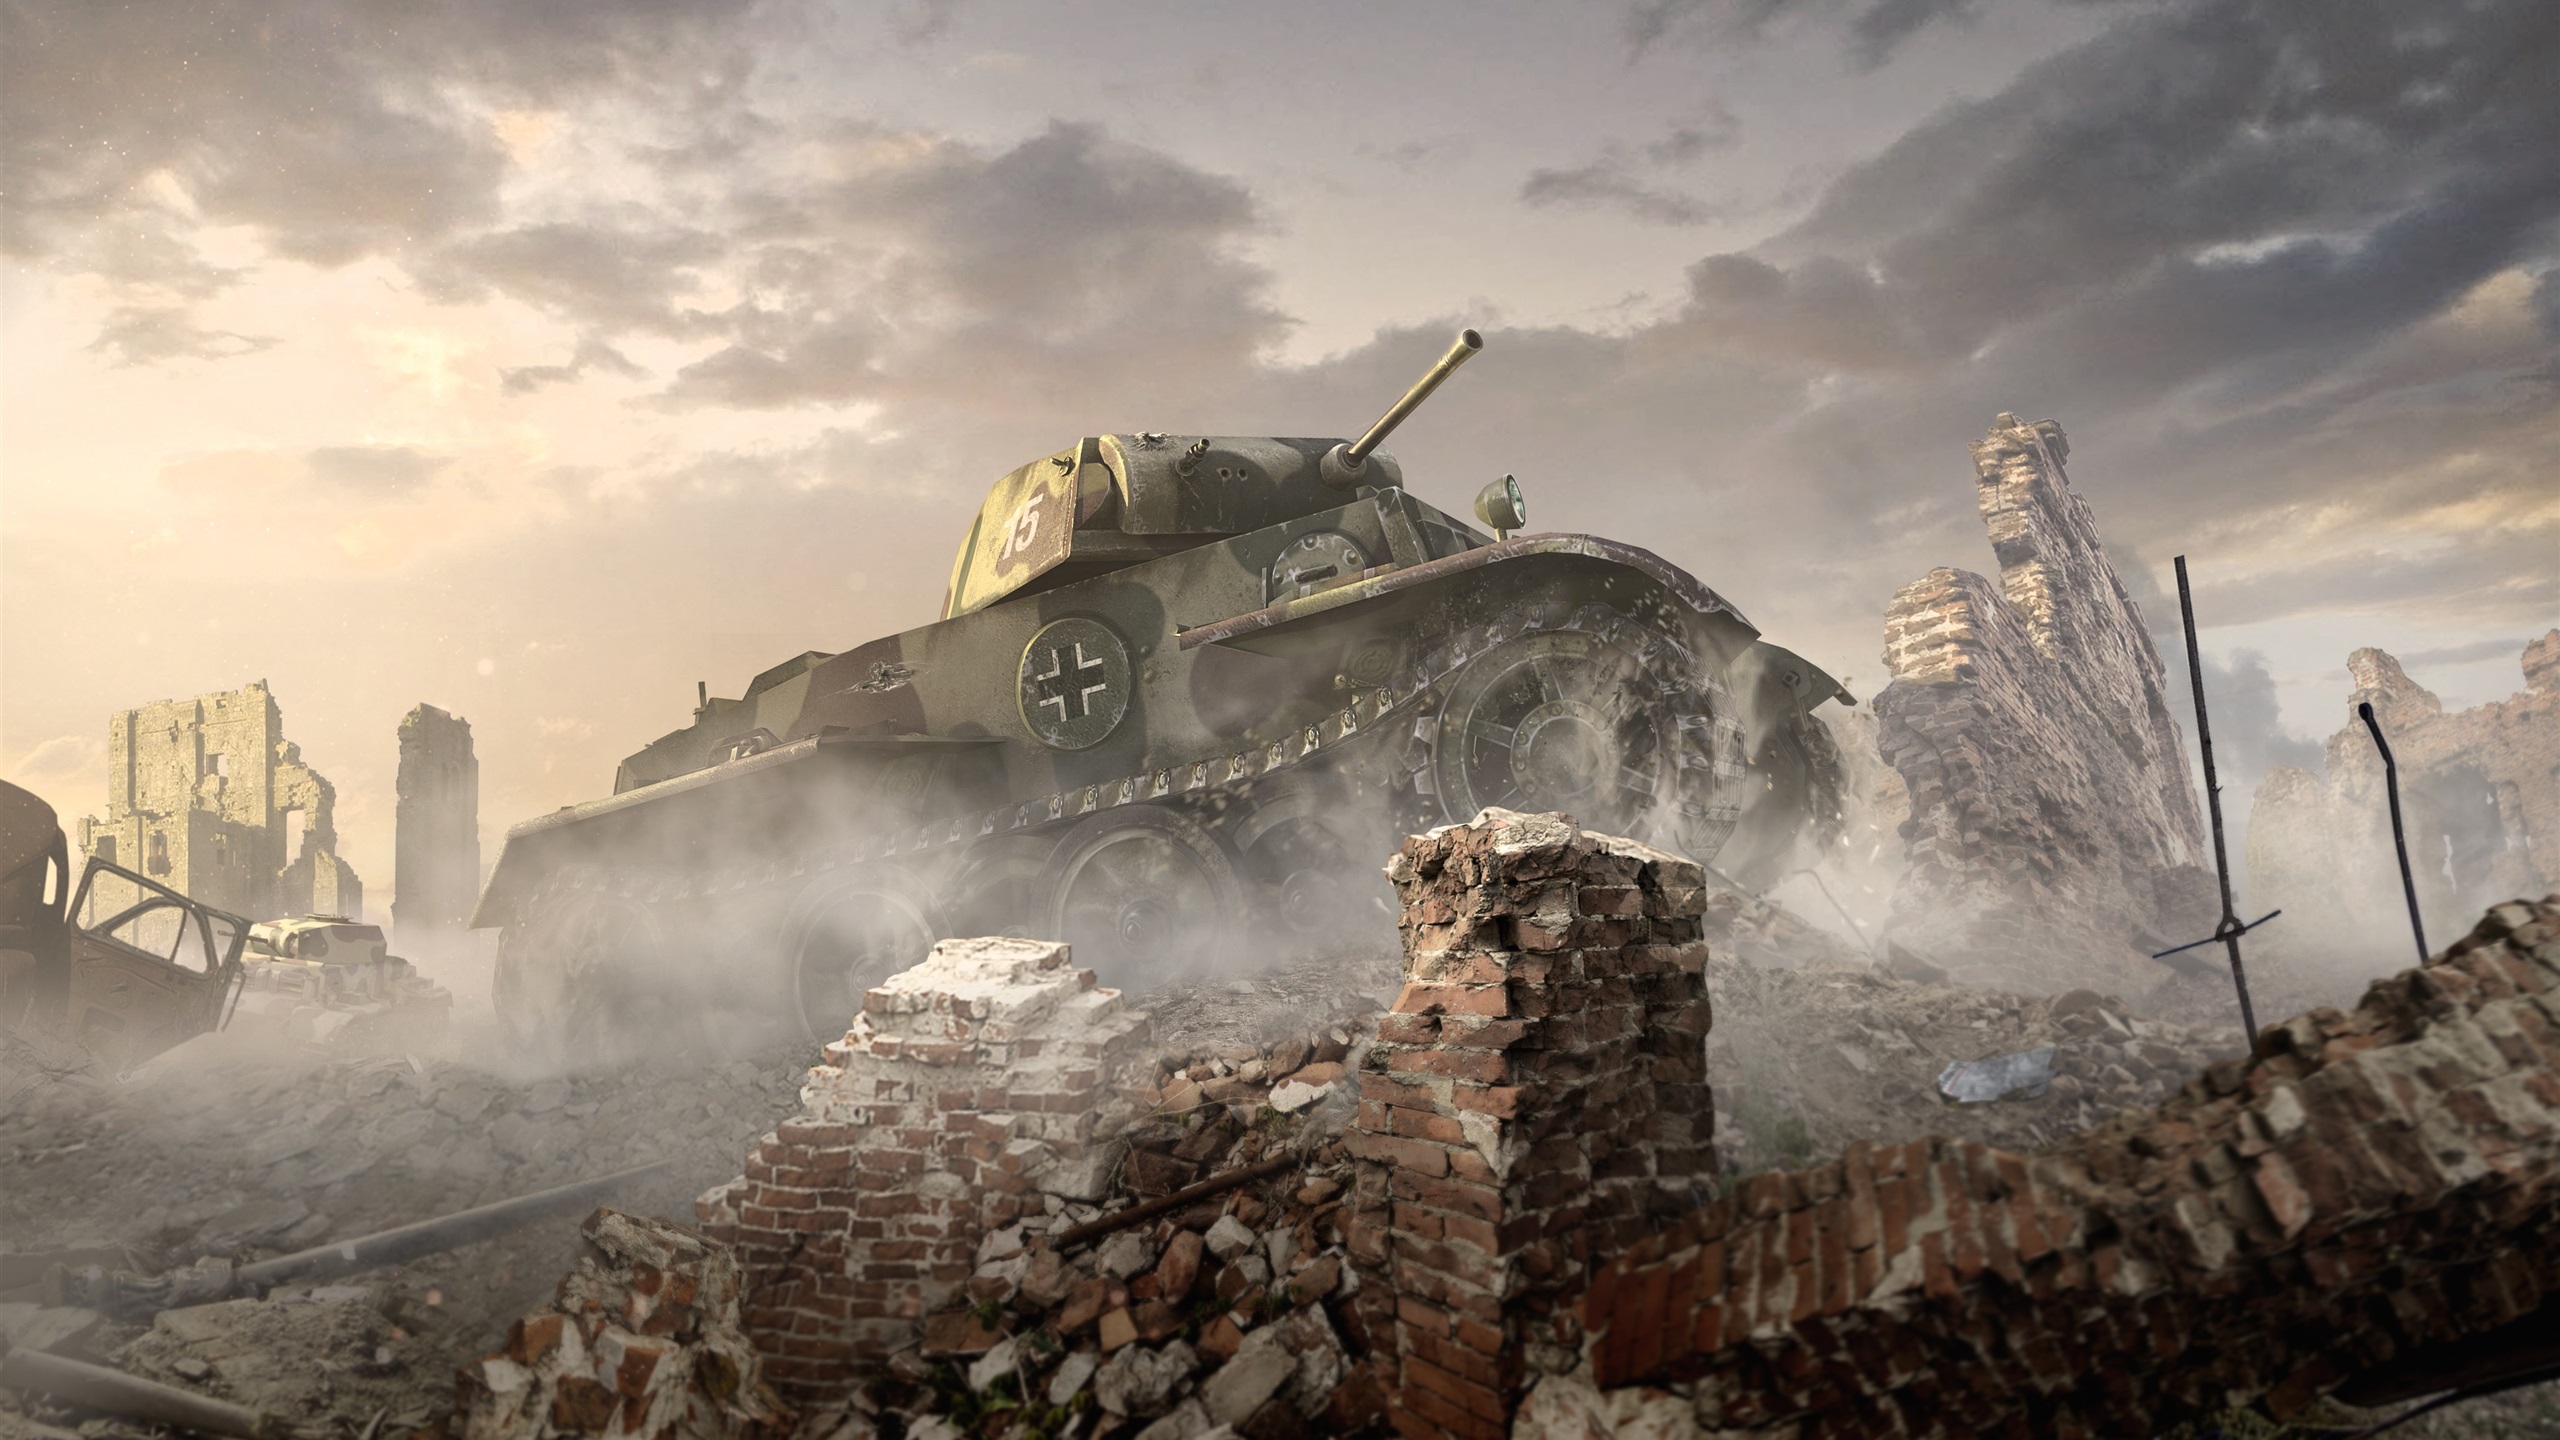 General 2560x1440 tank World of Tanks video games war clouds sky ruins Panzer II